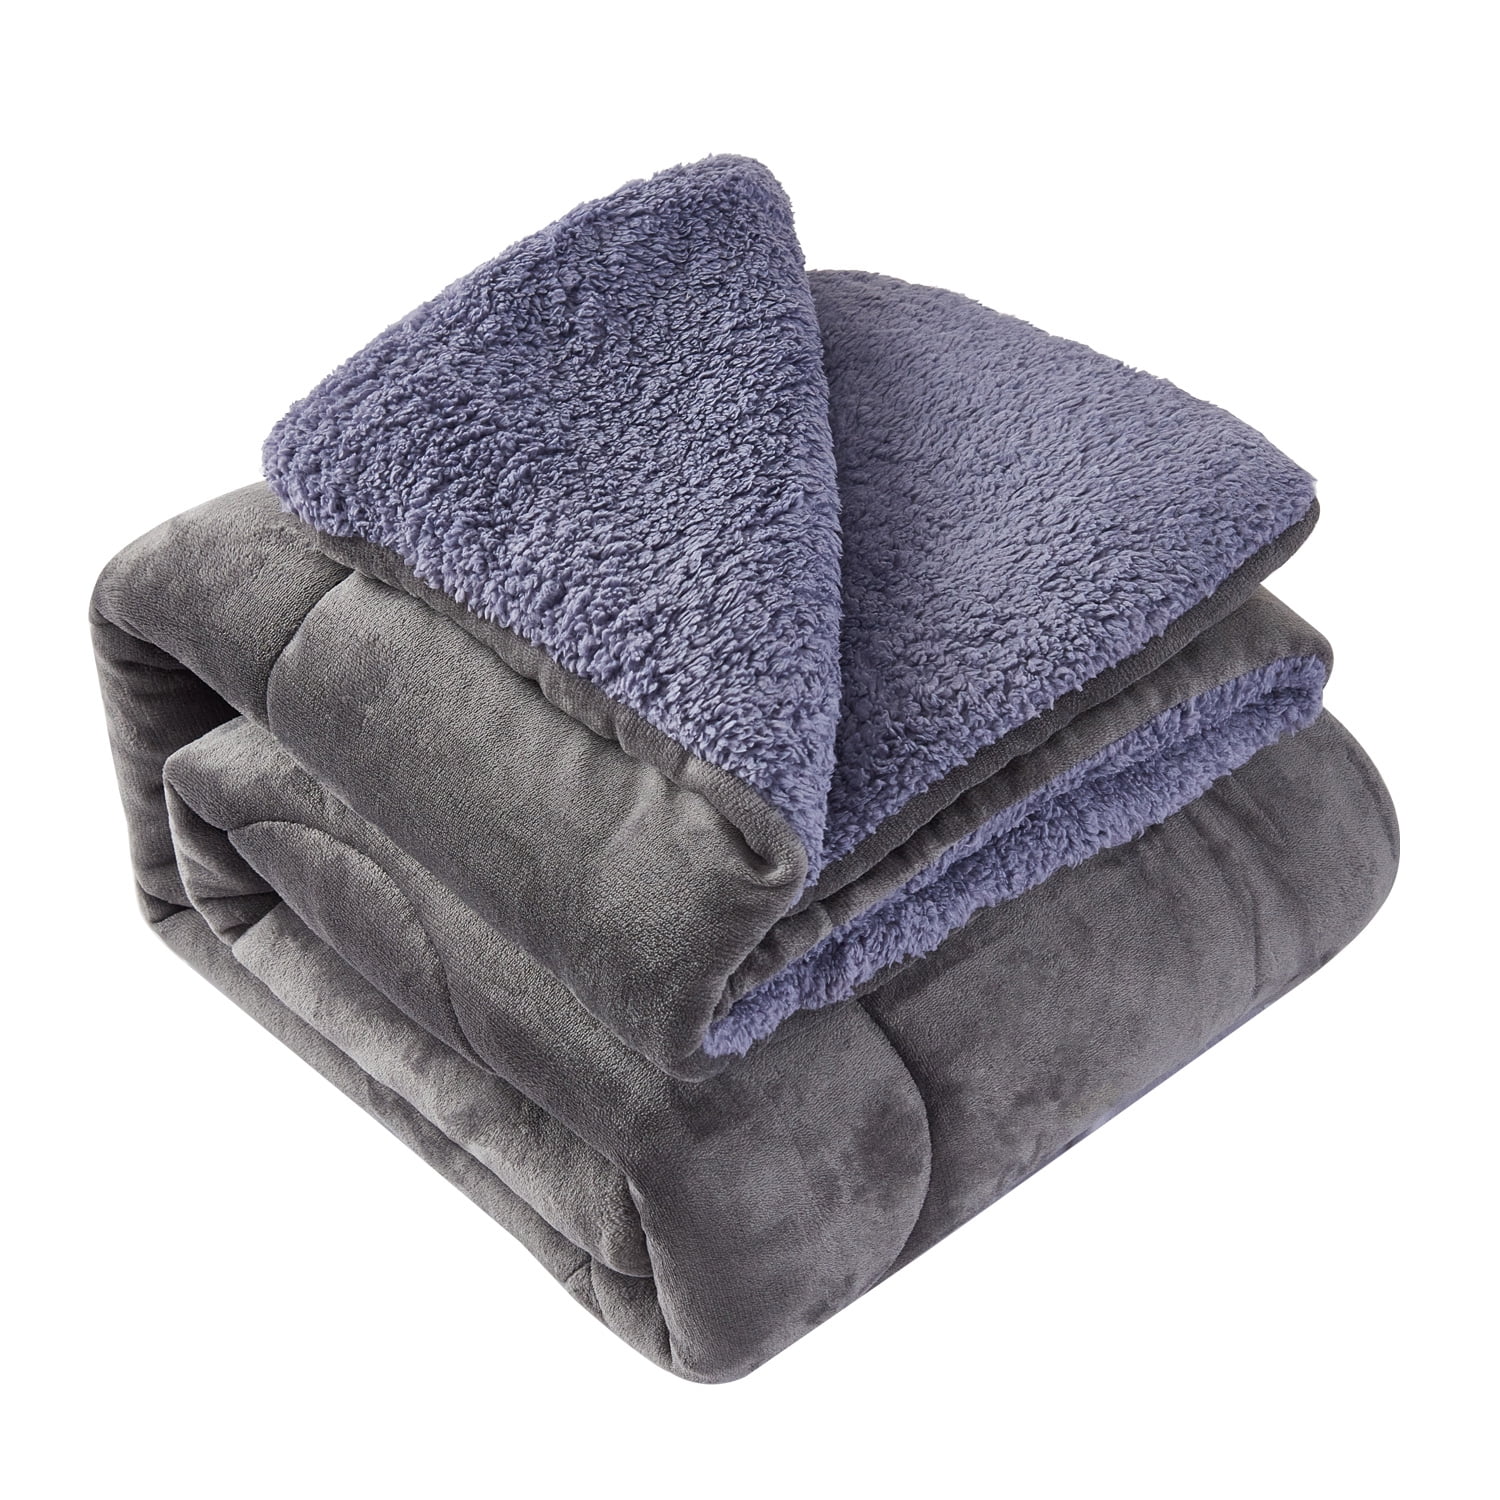 Jml Sherpa Fleece Bed Blankets Grey Thick Warm Borrego Queen Blanket For Bed 75x83